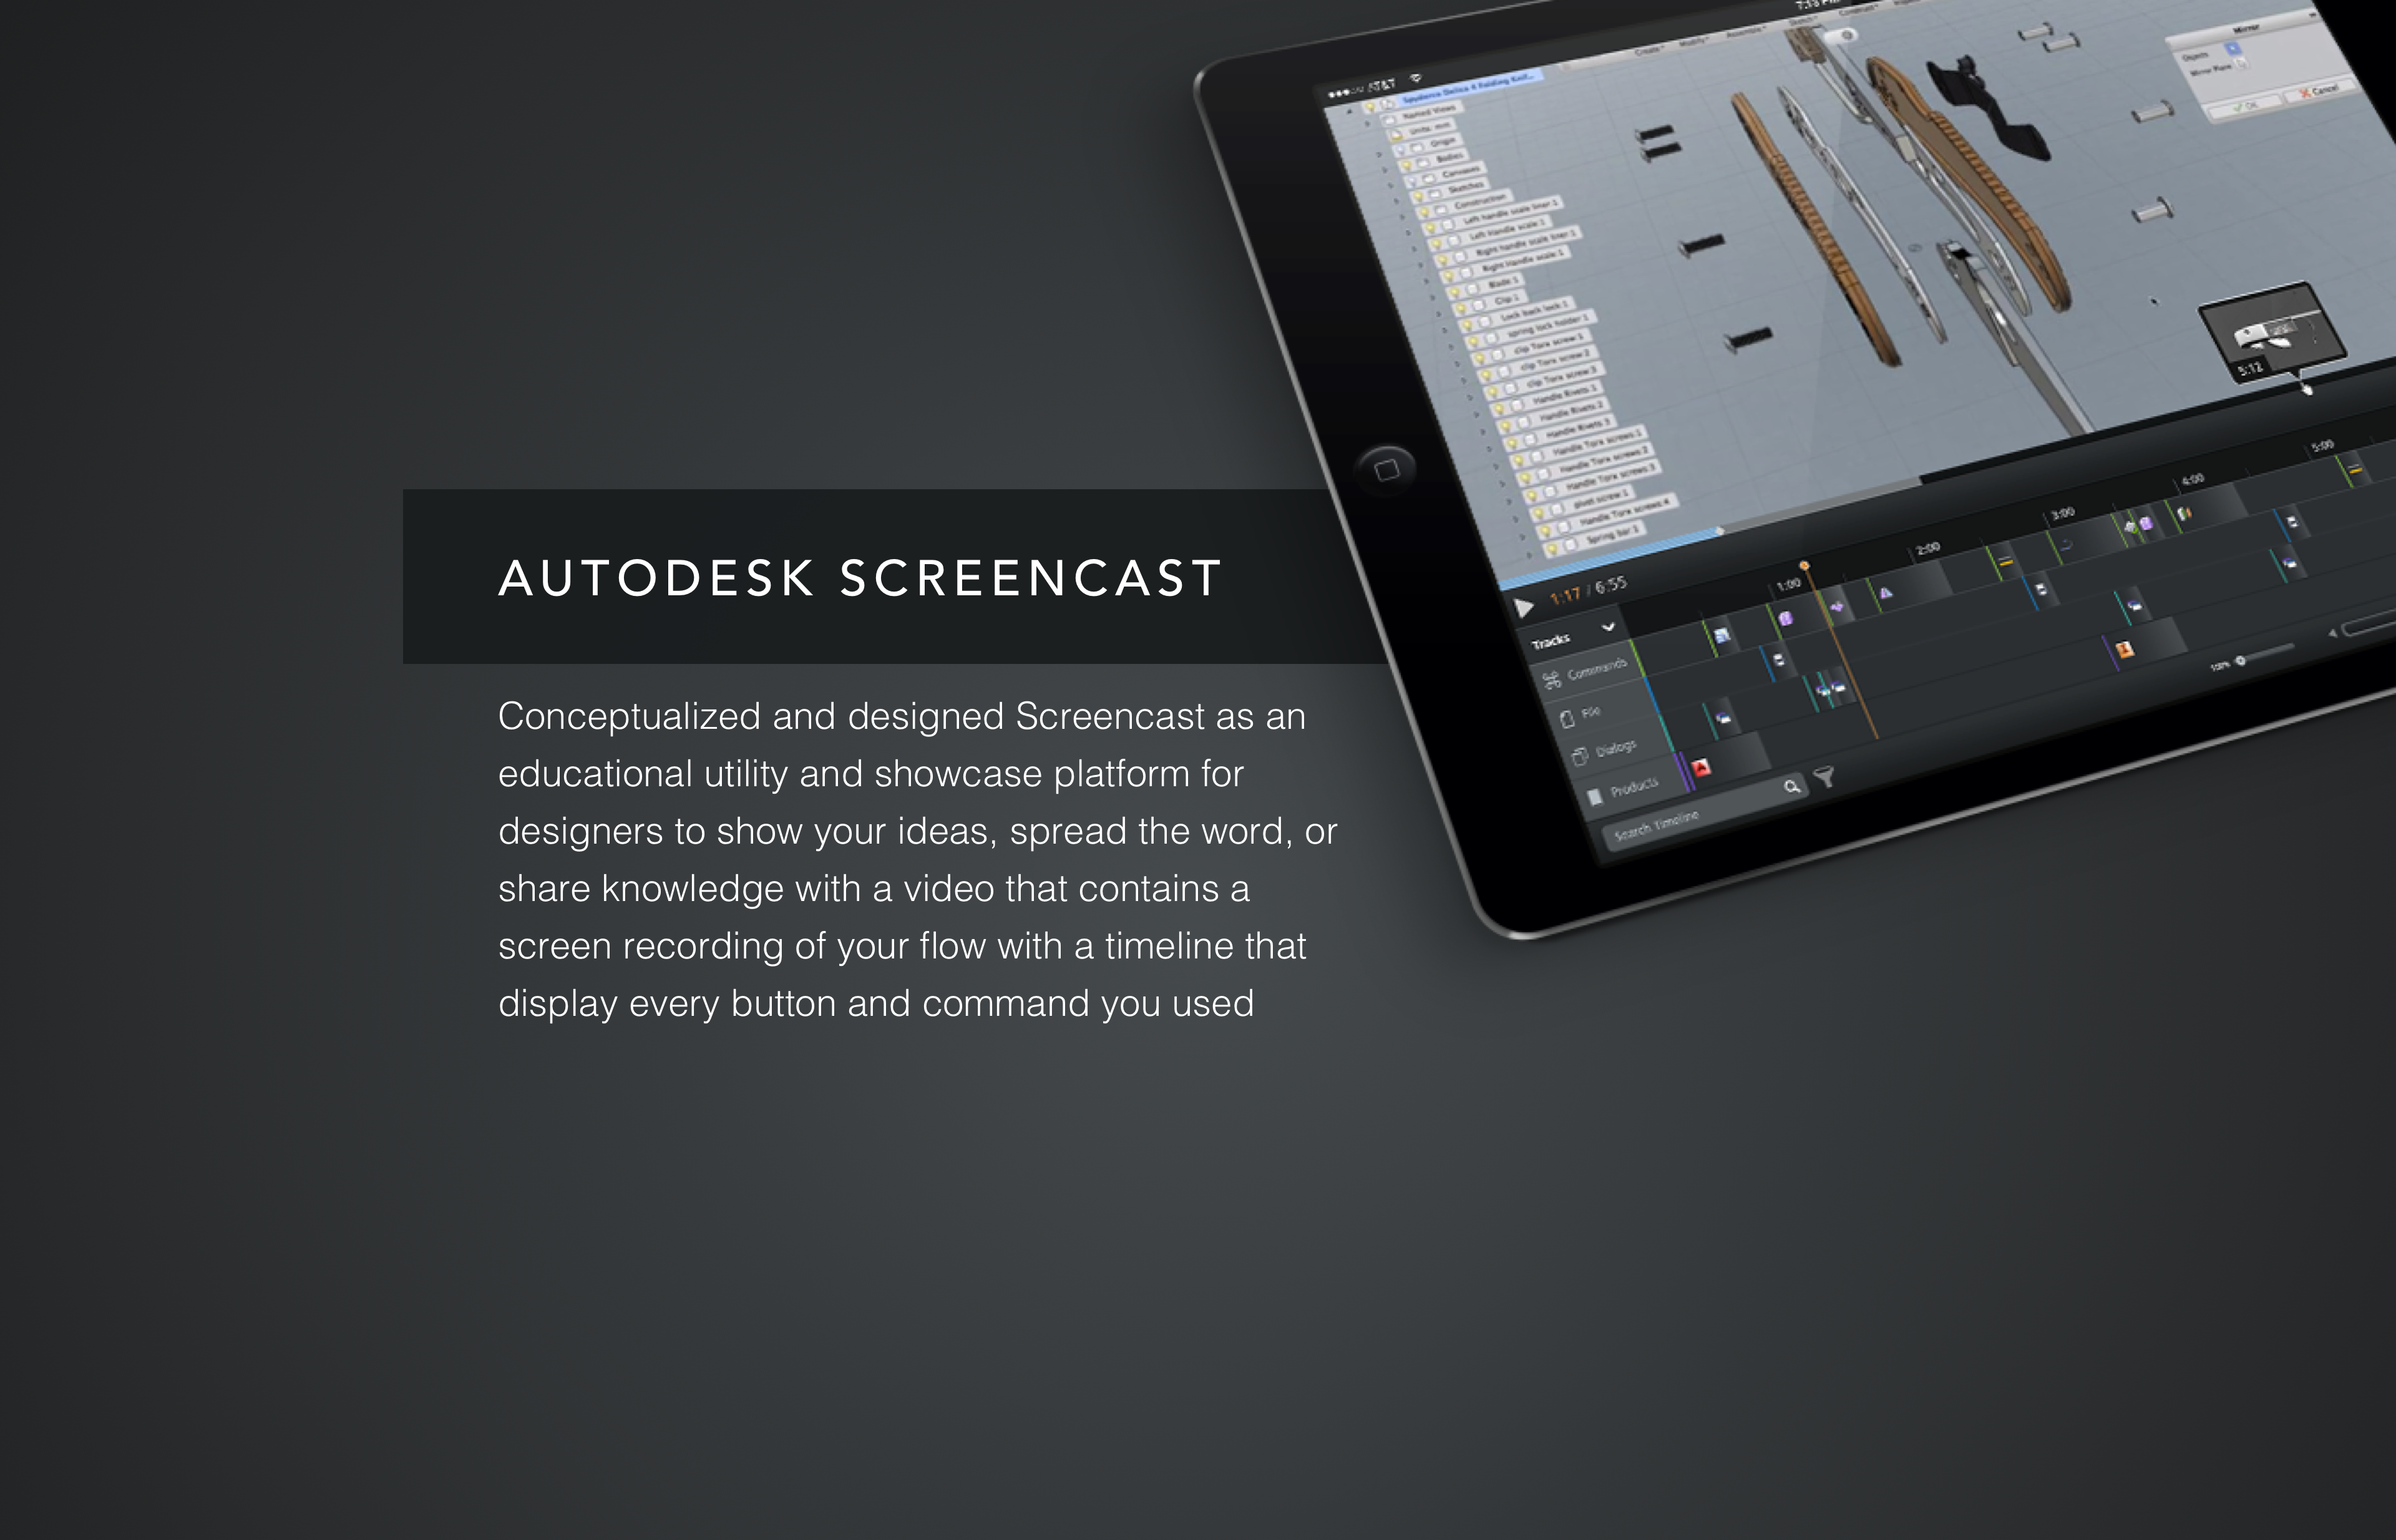 Autodesk Screencast